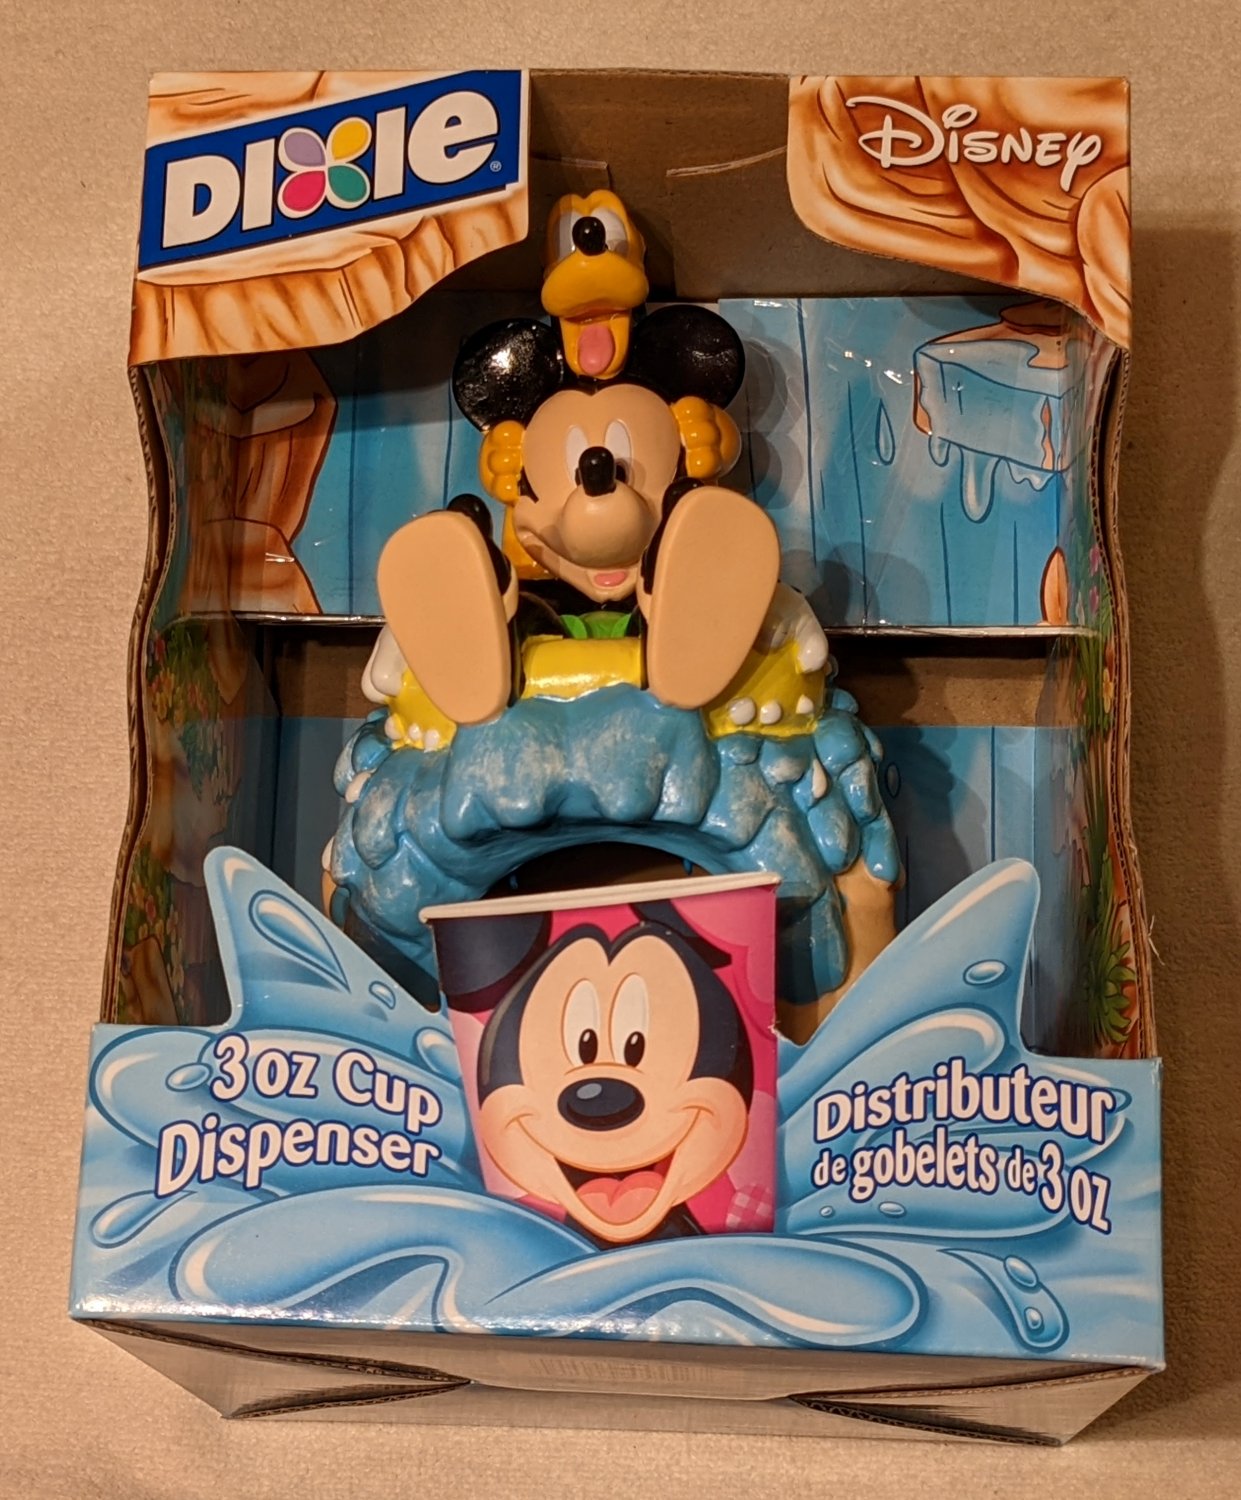 Disney Three (3) Ounce Dixie Cup Dispenser Mickey Mouse Pluto Splash Mountain Water Tubing NIB